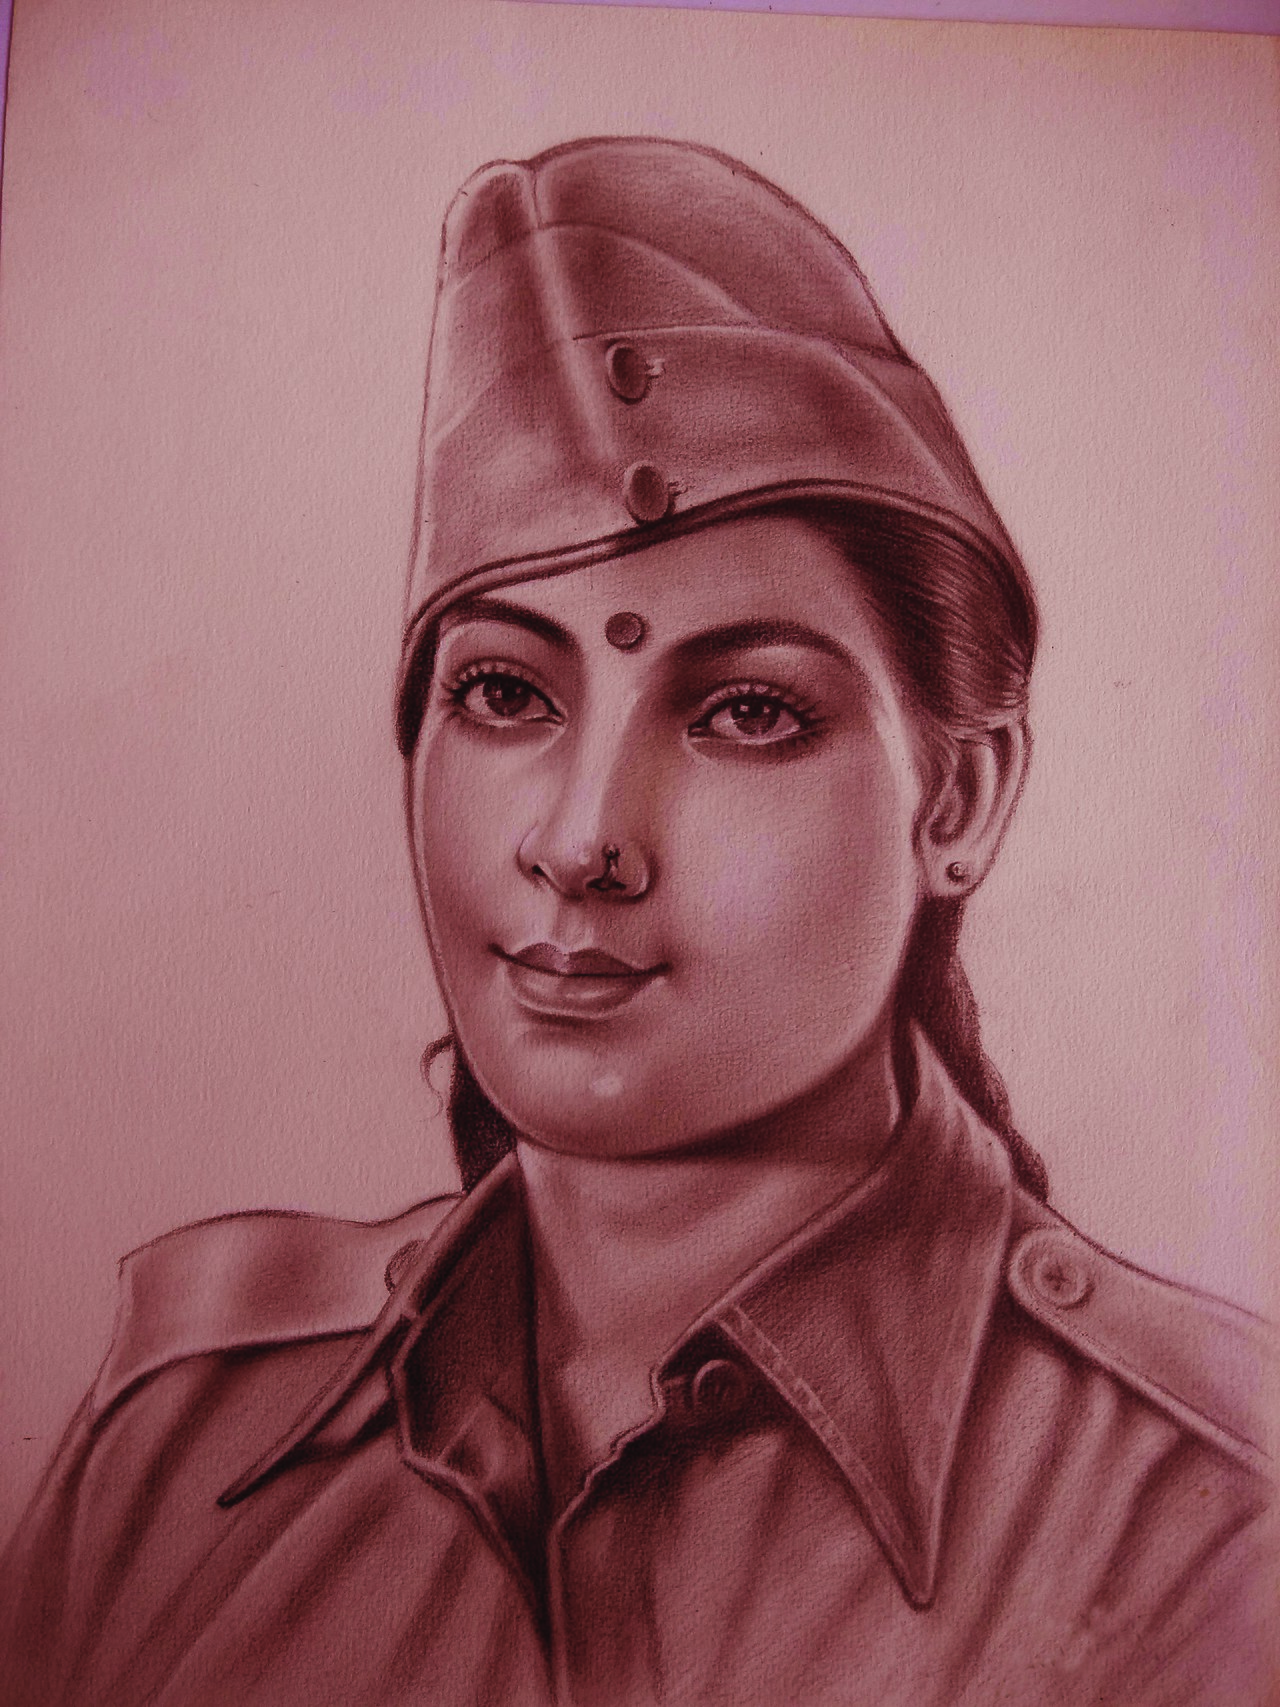 Portrait Pencil Sketch by Subroto Kumar Mondol on Dribbble